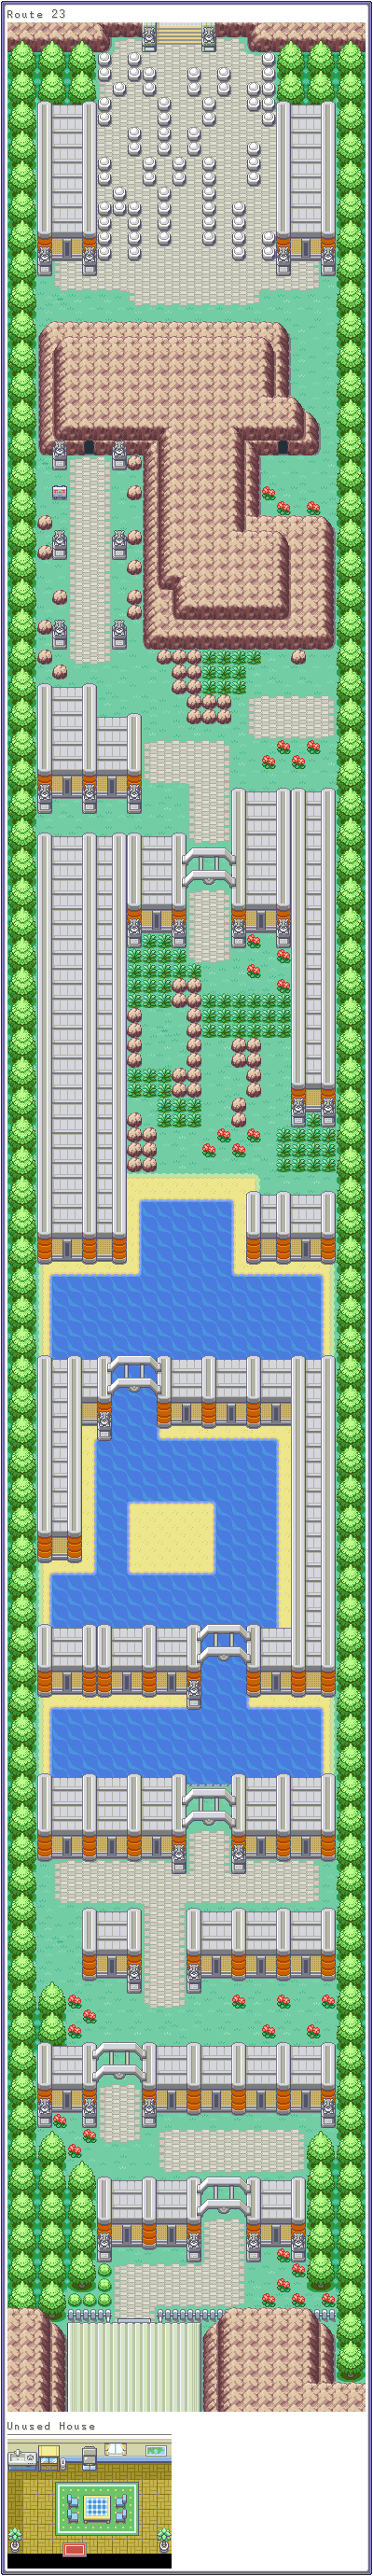 Pokémon FireRed / LeafGreen - Route 23